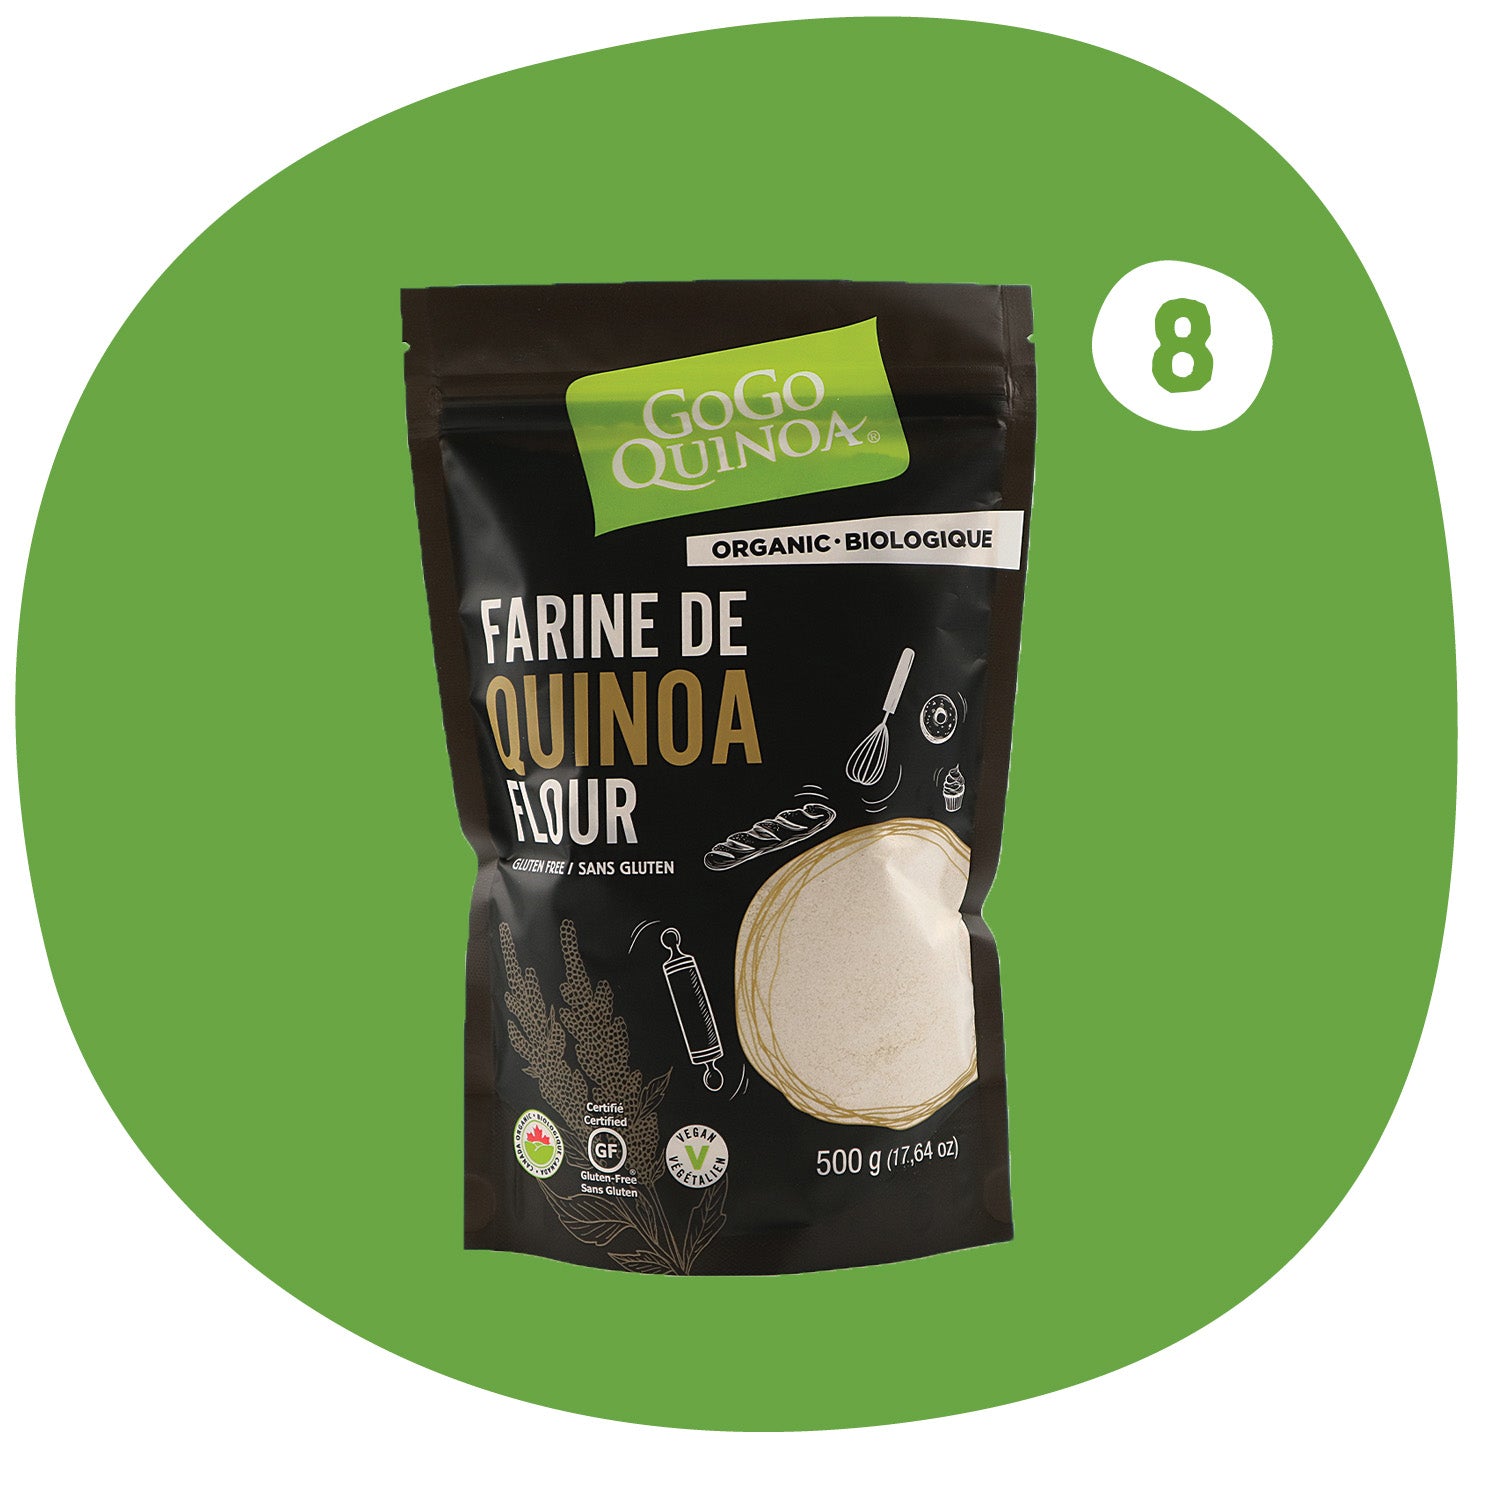 Quinoa flour (8 bags)